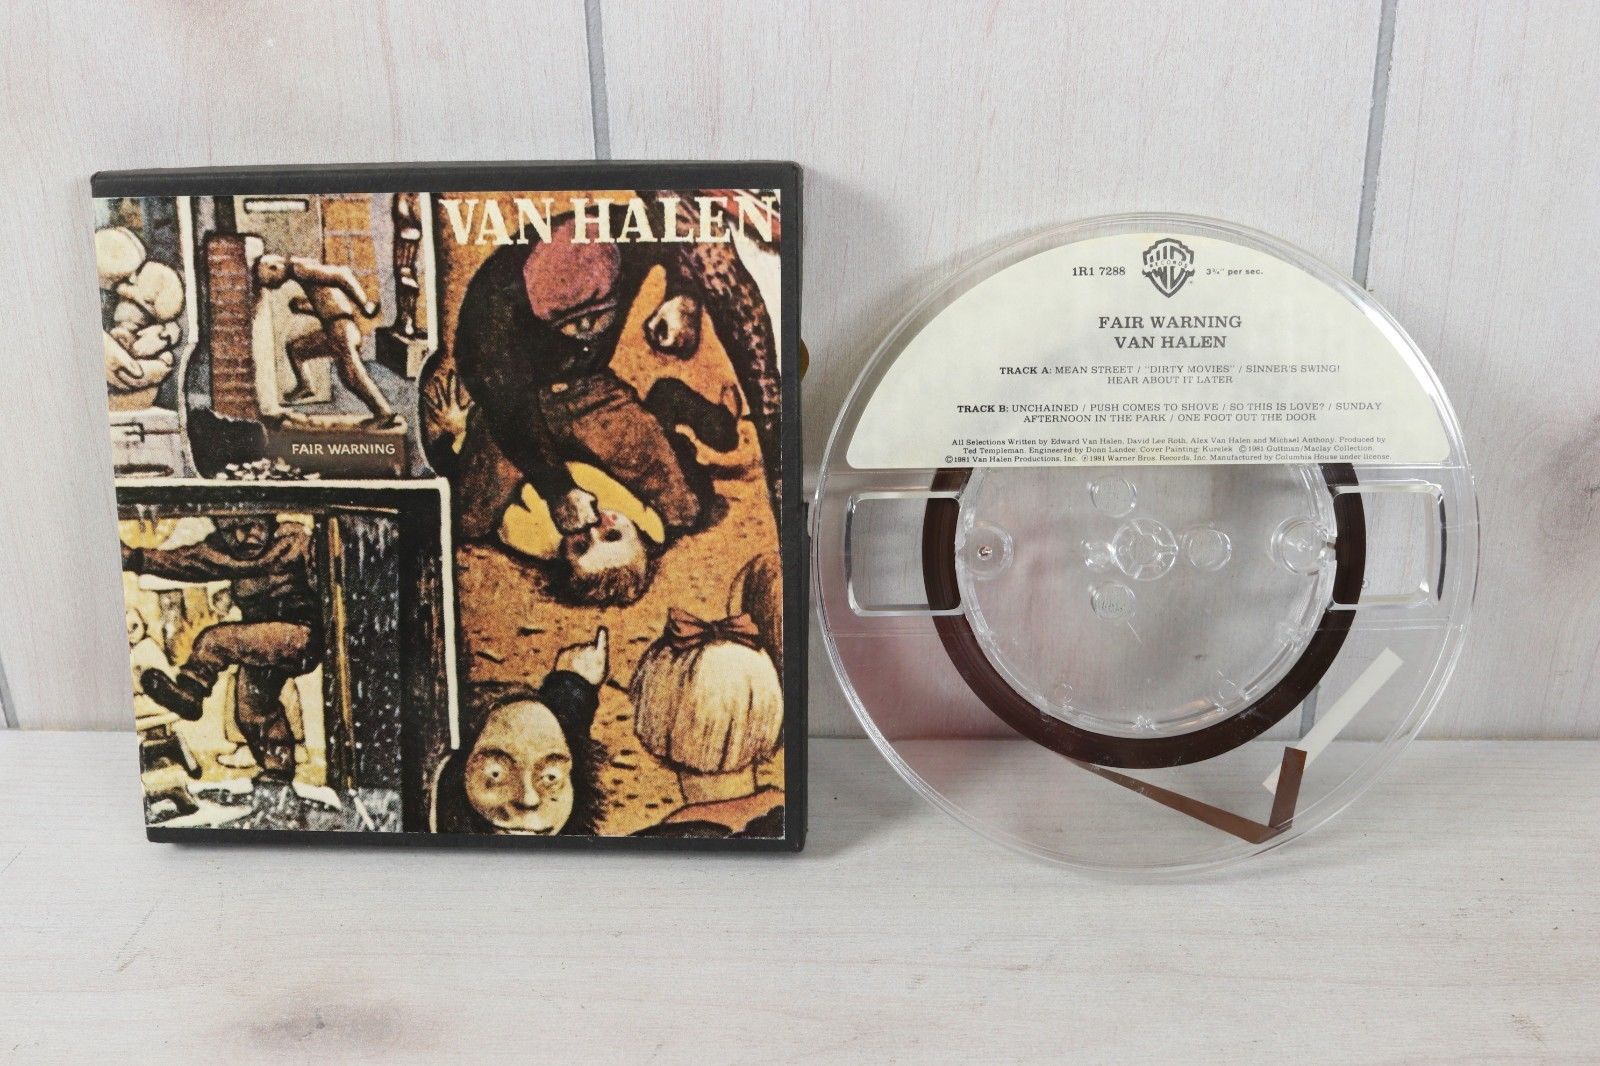  Van Halen Fair Warning Reel To Reel Tape Original